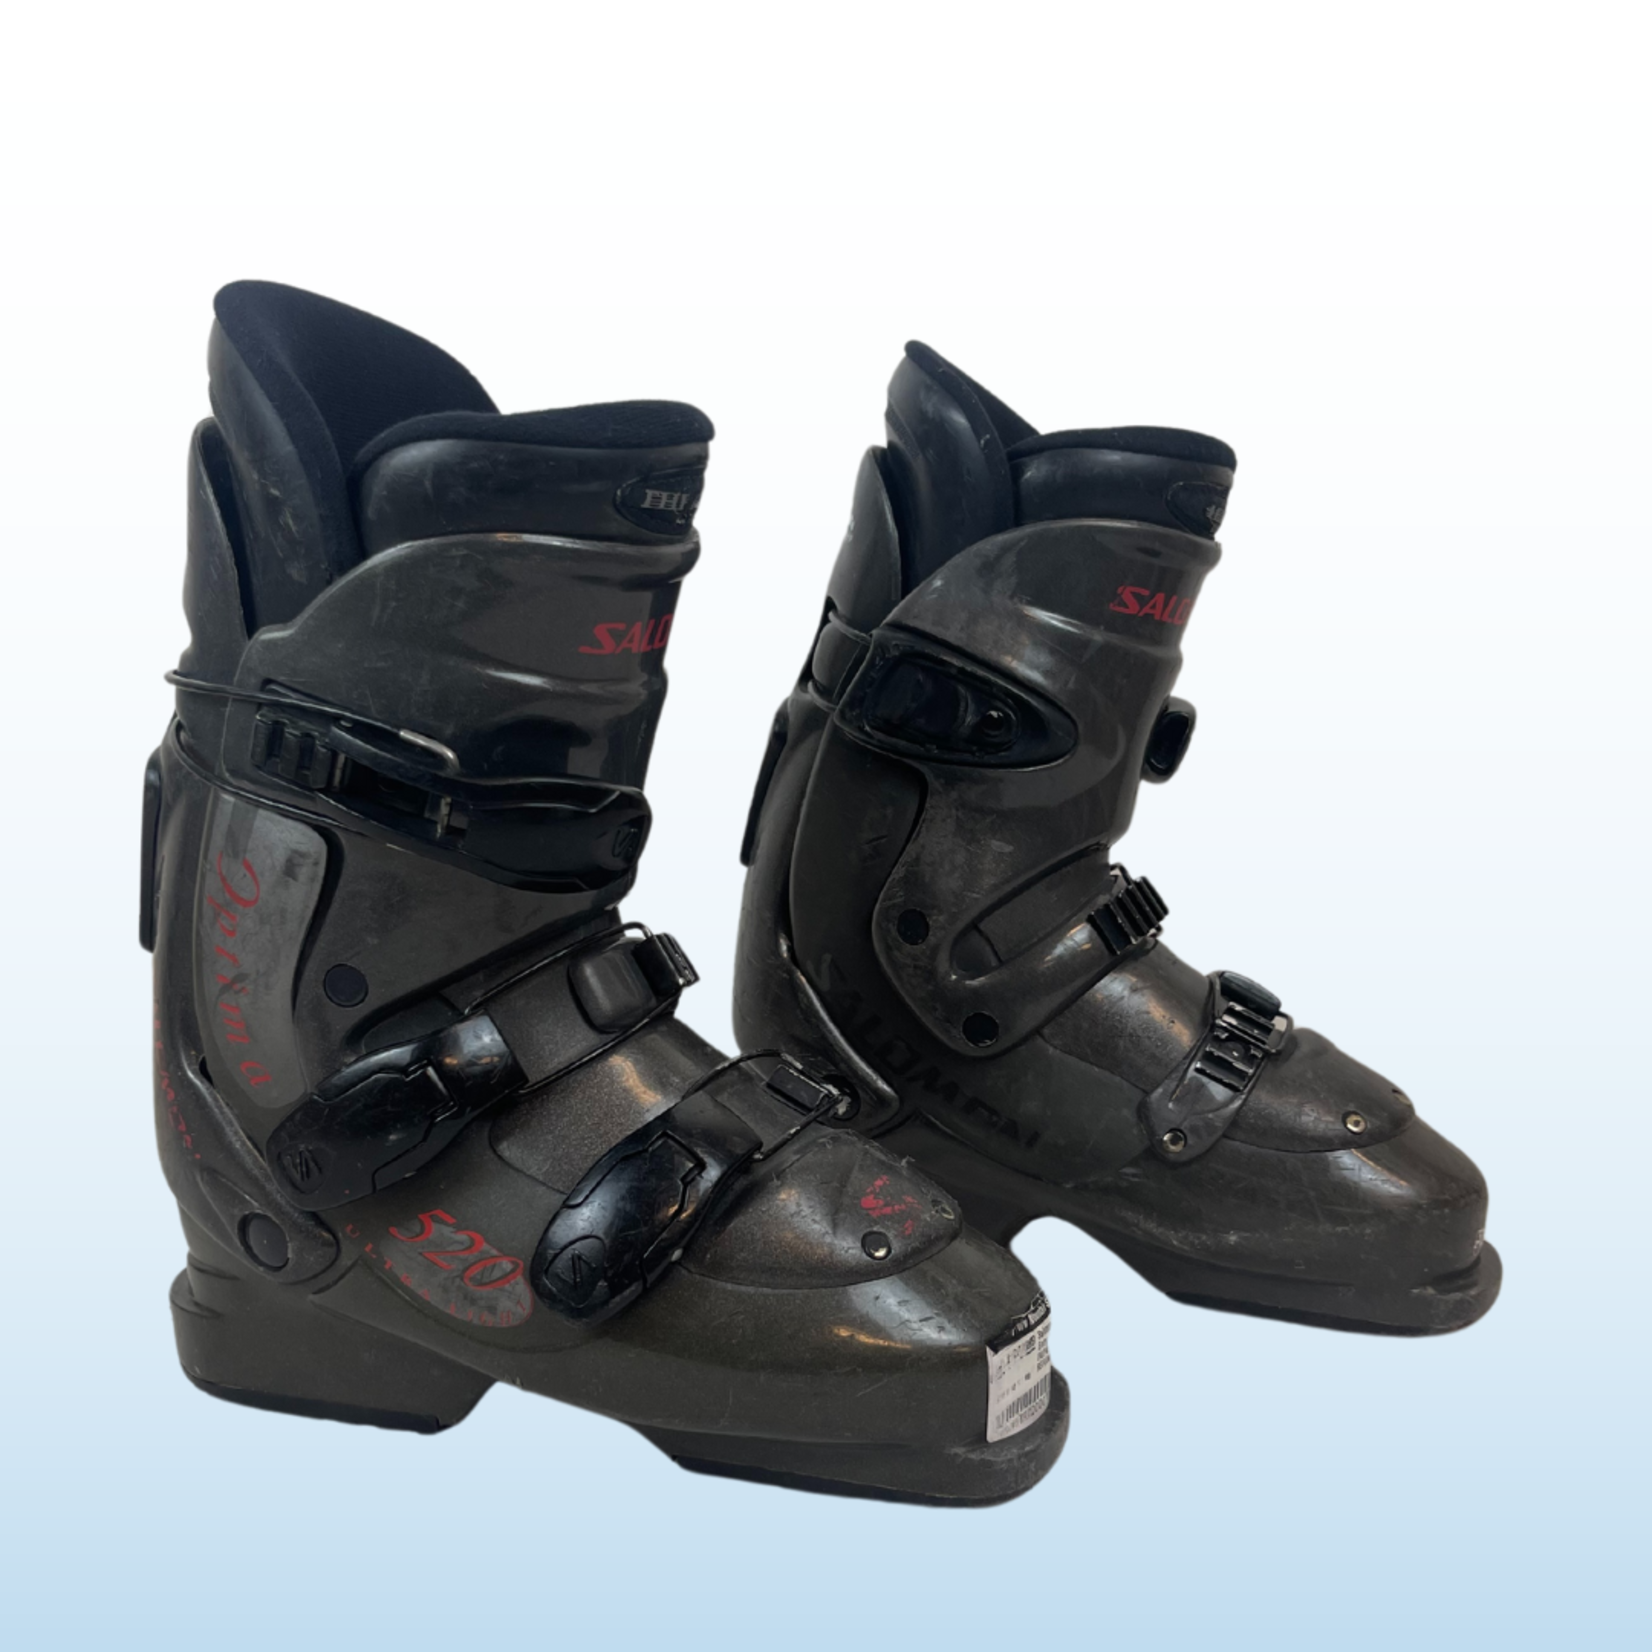 Salomon Salomon Symbio Rear Entry Ski Boots, Size 27/27.5  SOLD AS IS/NO REFUNDS/EXCHANGES